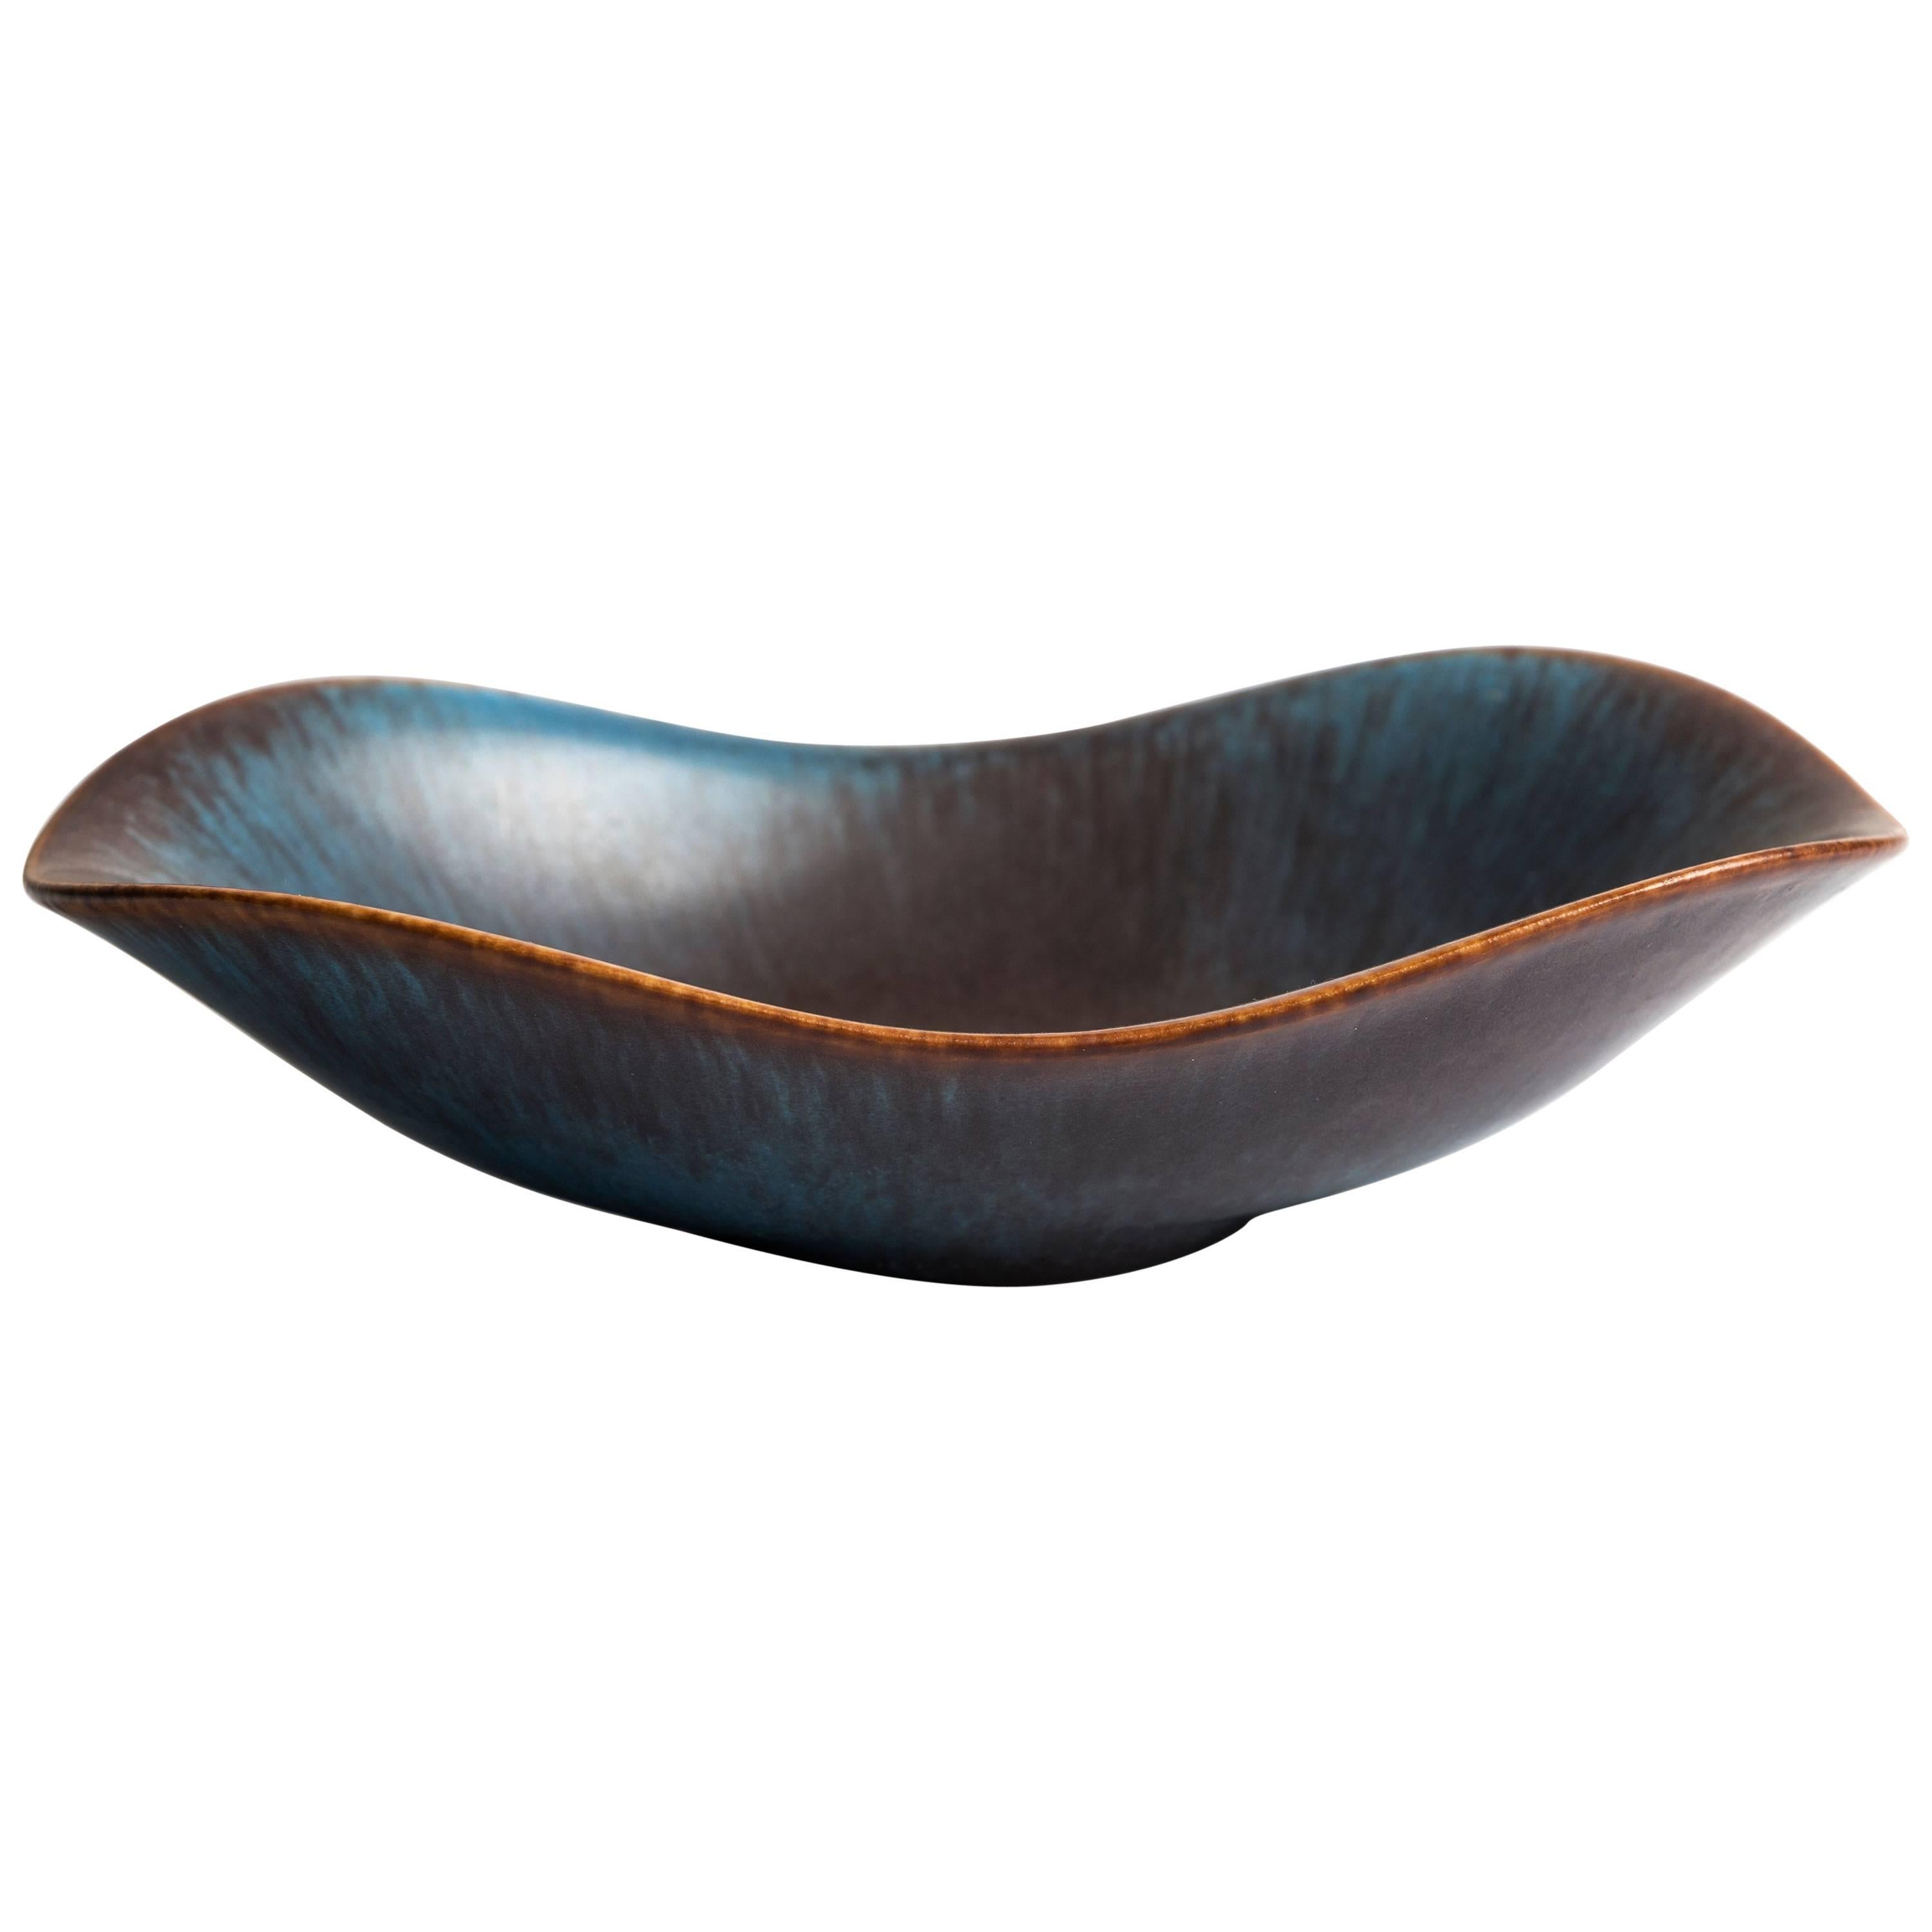 Gunnar Nylund Stoneware Bowl for Rörstrand, Midcentury Scandinavian Ceramics For Sale